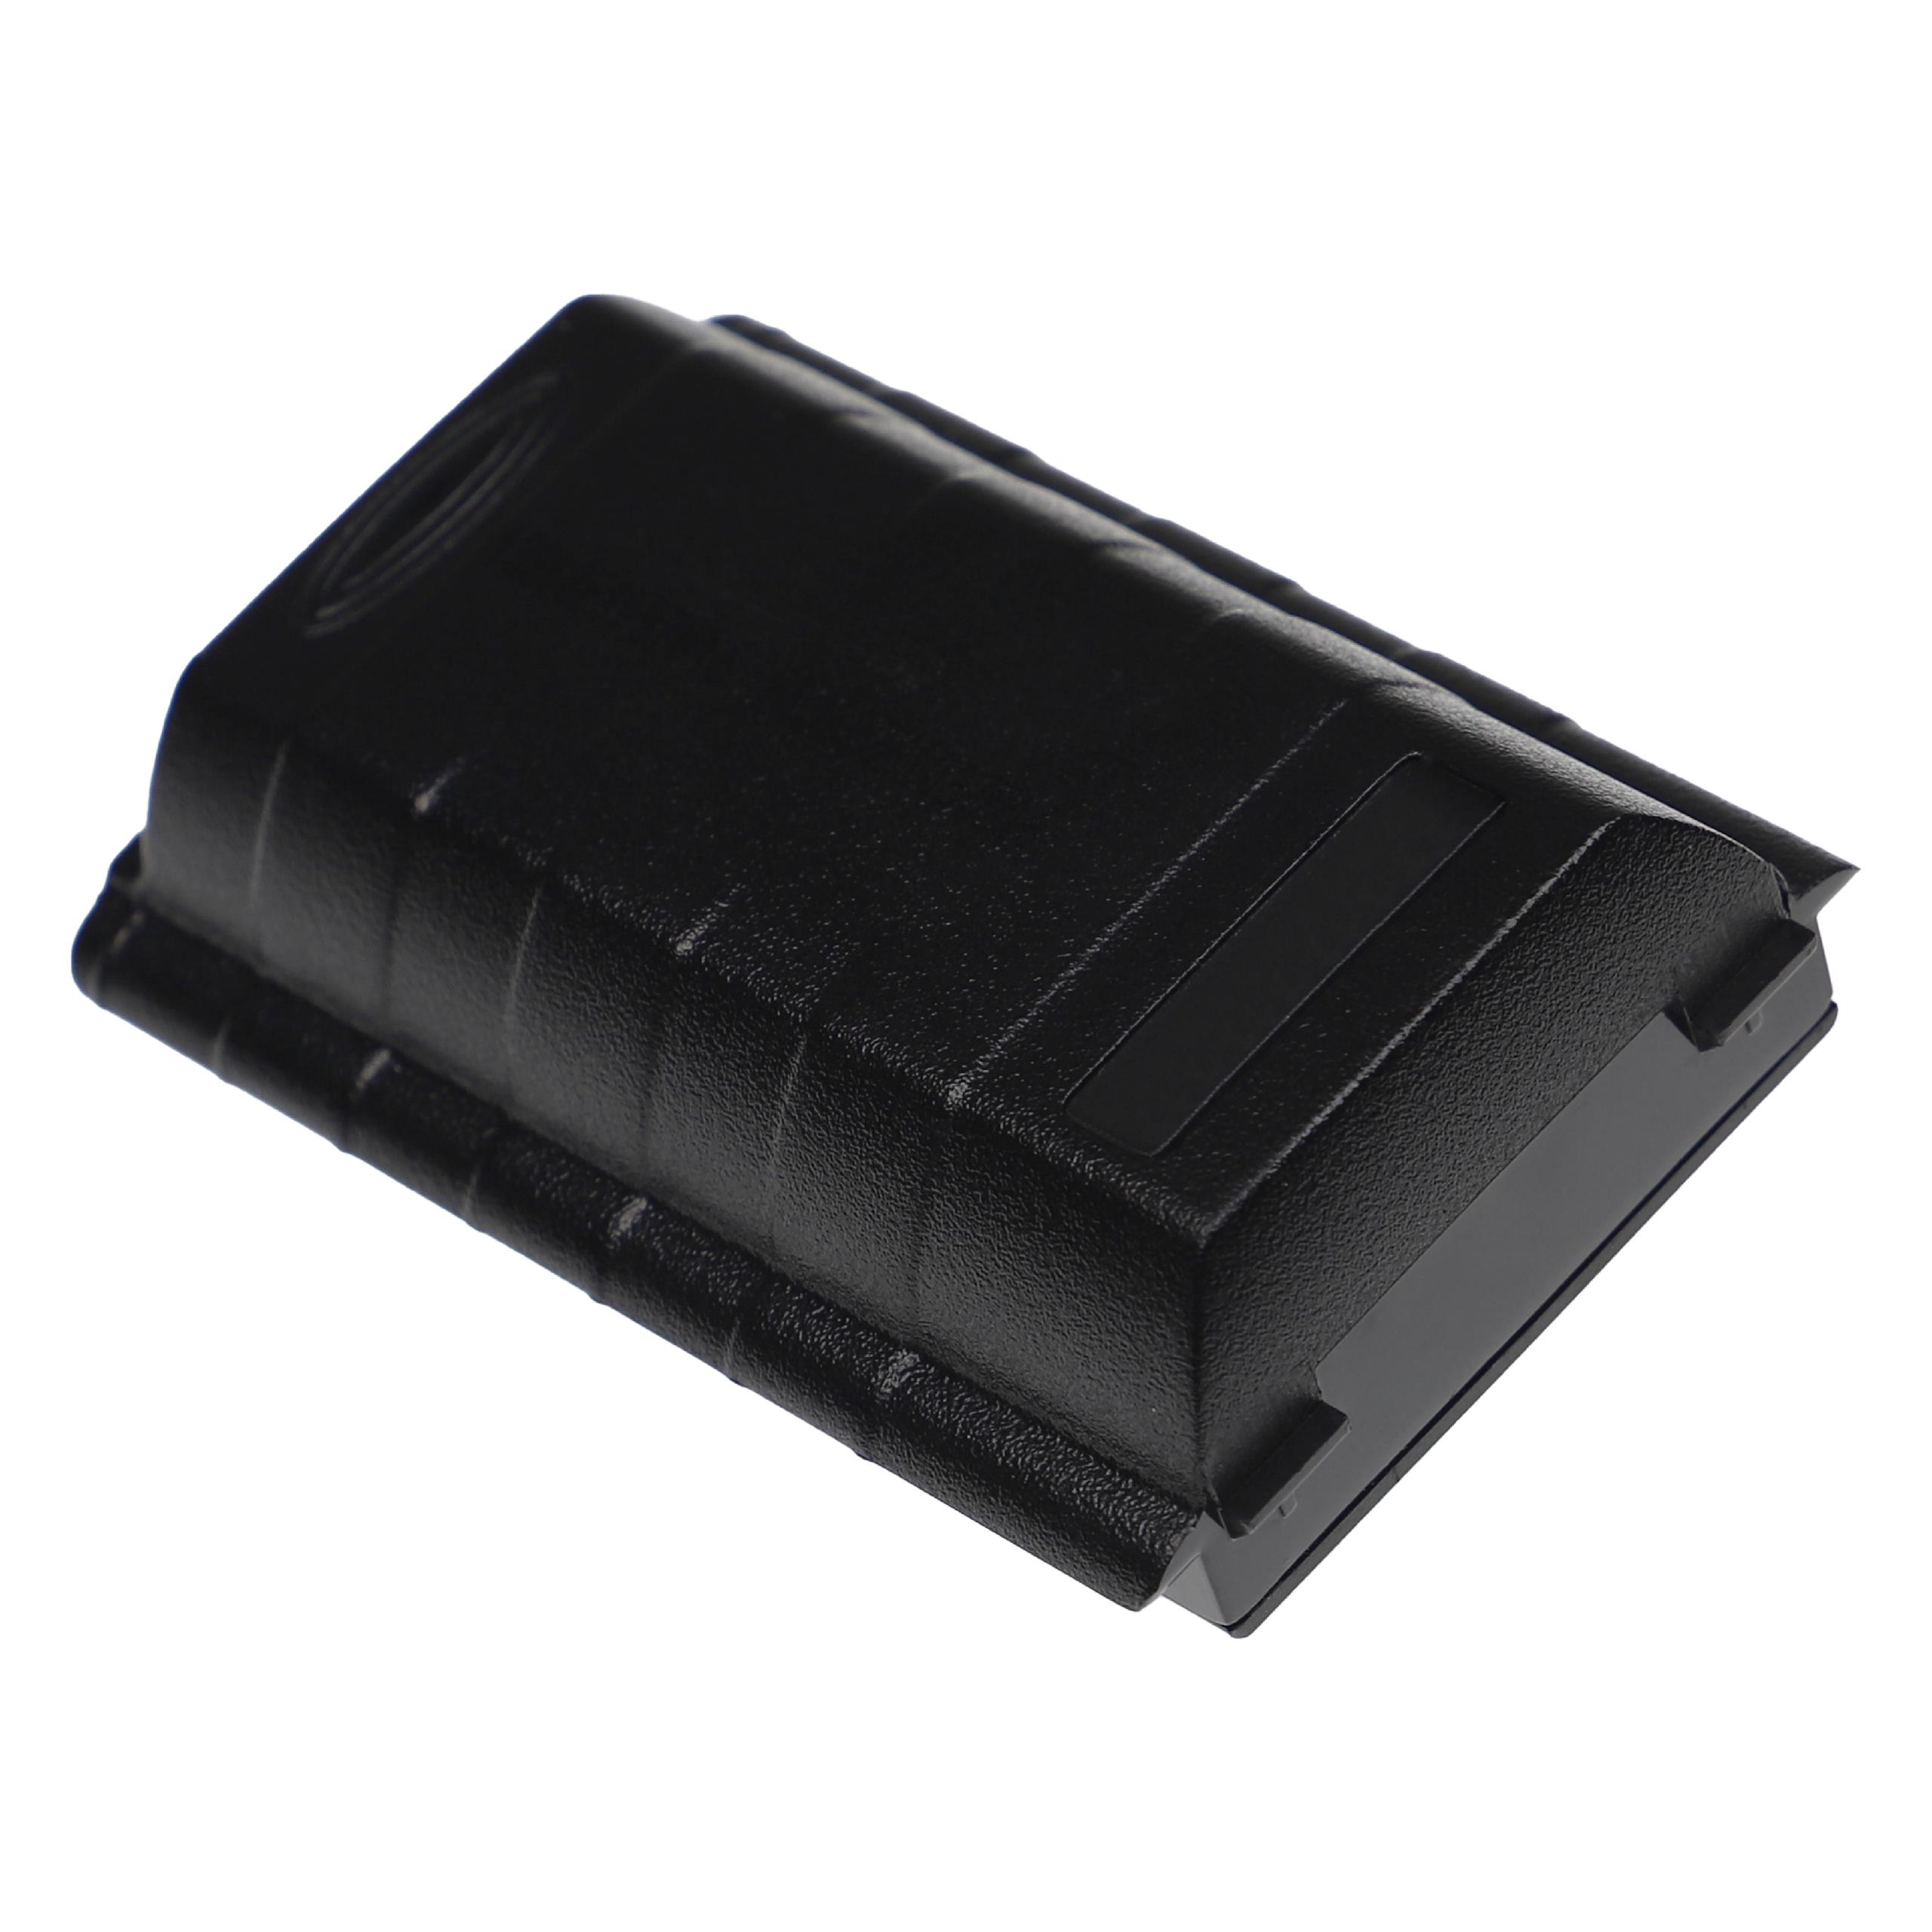 Batterie remplace Sepura 300-00635, 300-00631, 300-00634 pour radio talkie-walkie - 3300mAh 7,4V Li-ion